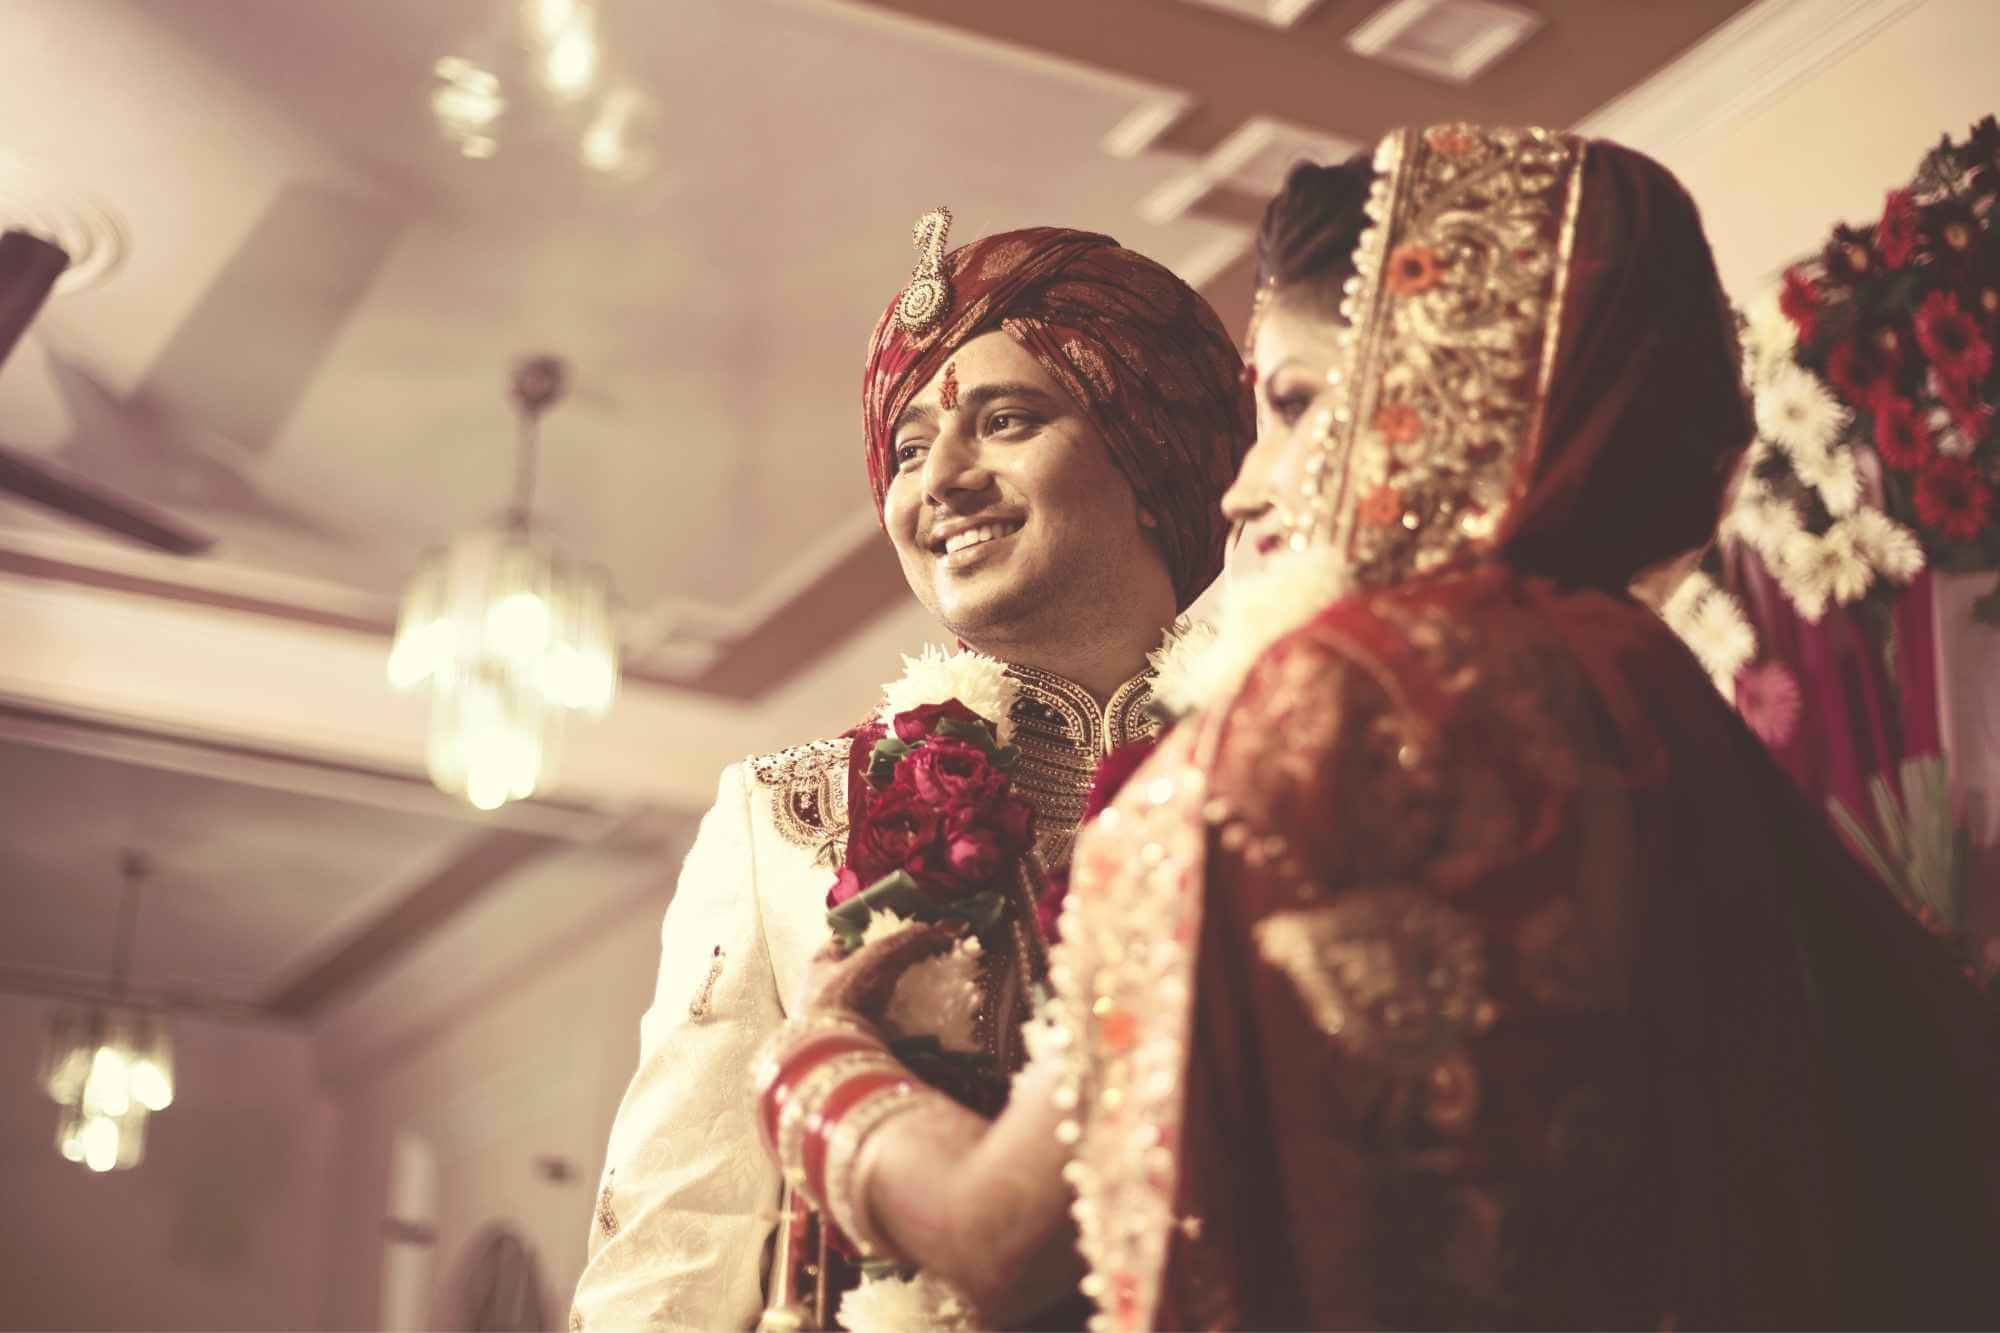 Indian wedding culture